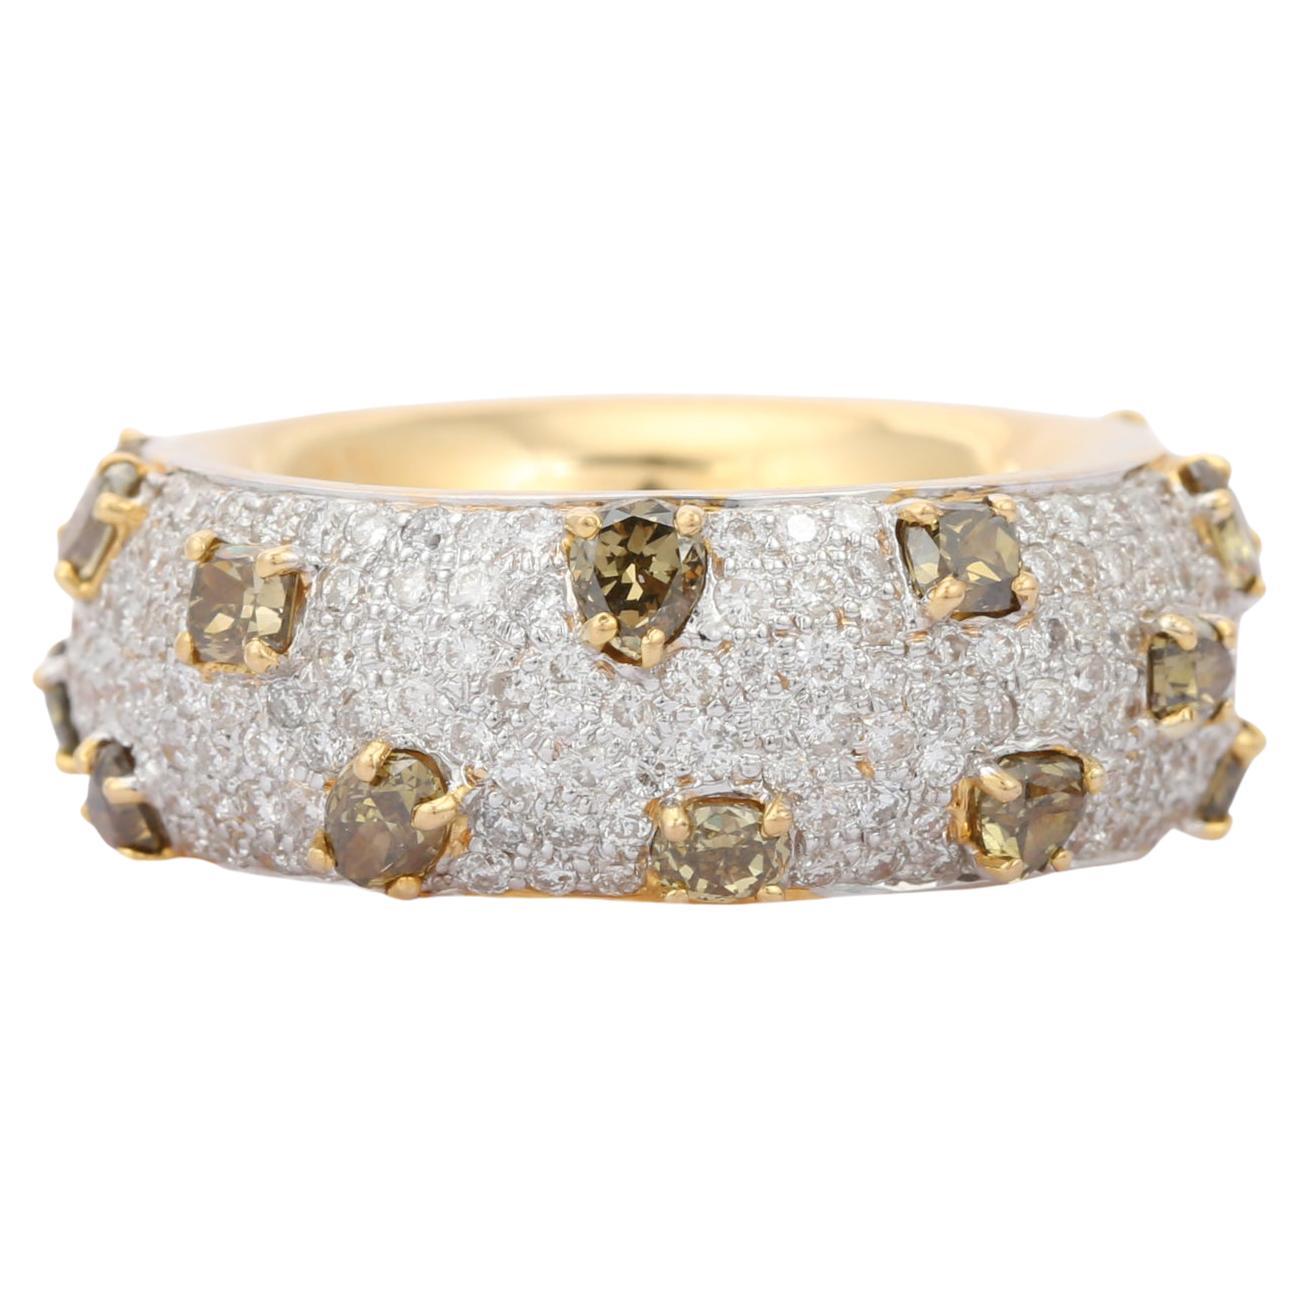 18 Karat Solid Yellow Gold 6.3 Carats Diamond Dome Ring, Fine Jewelry